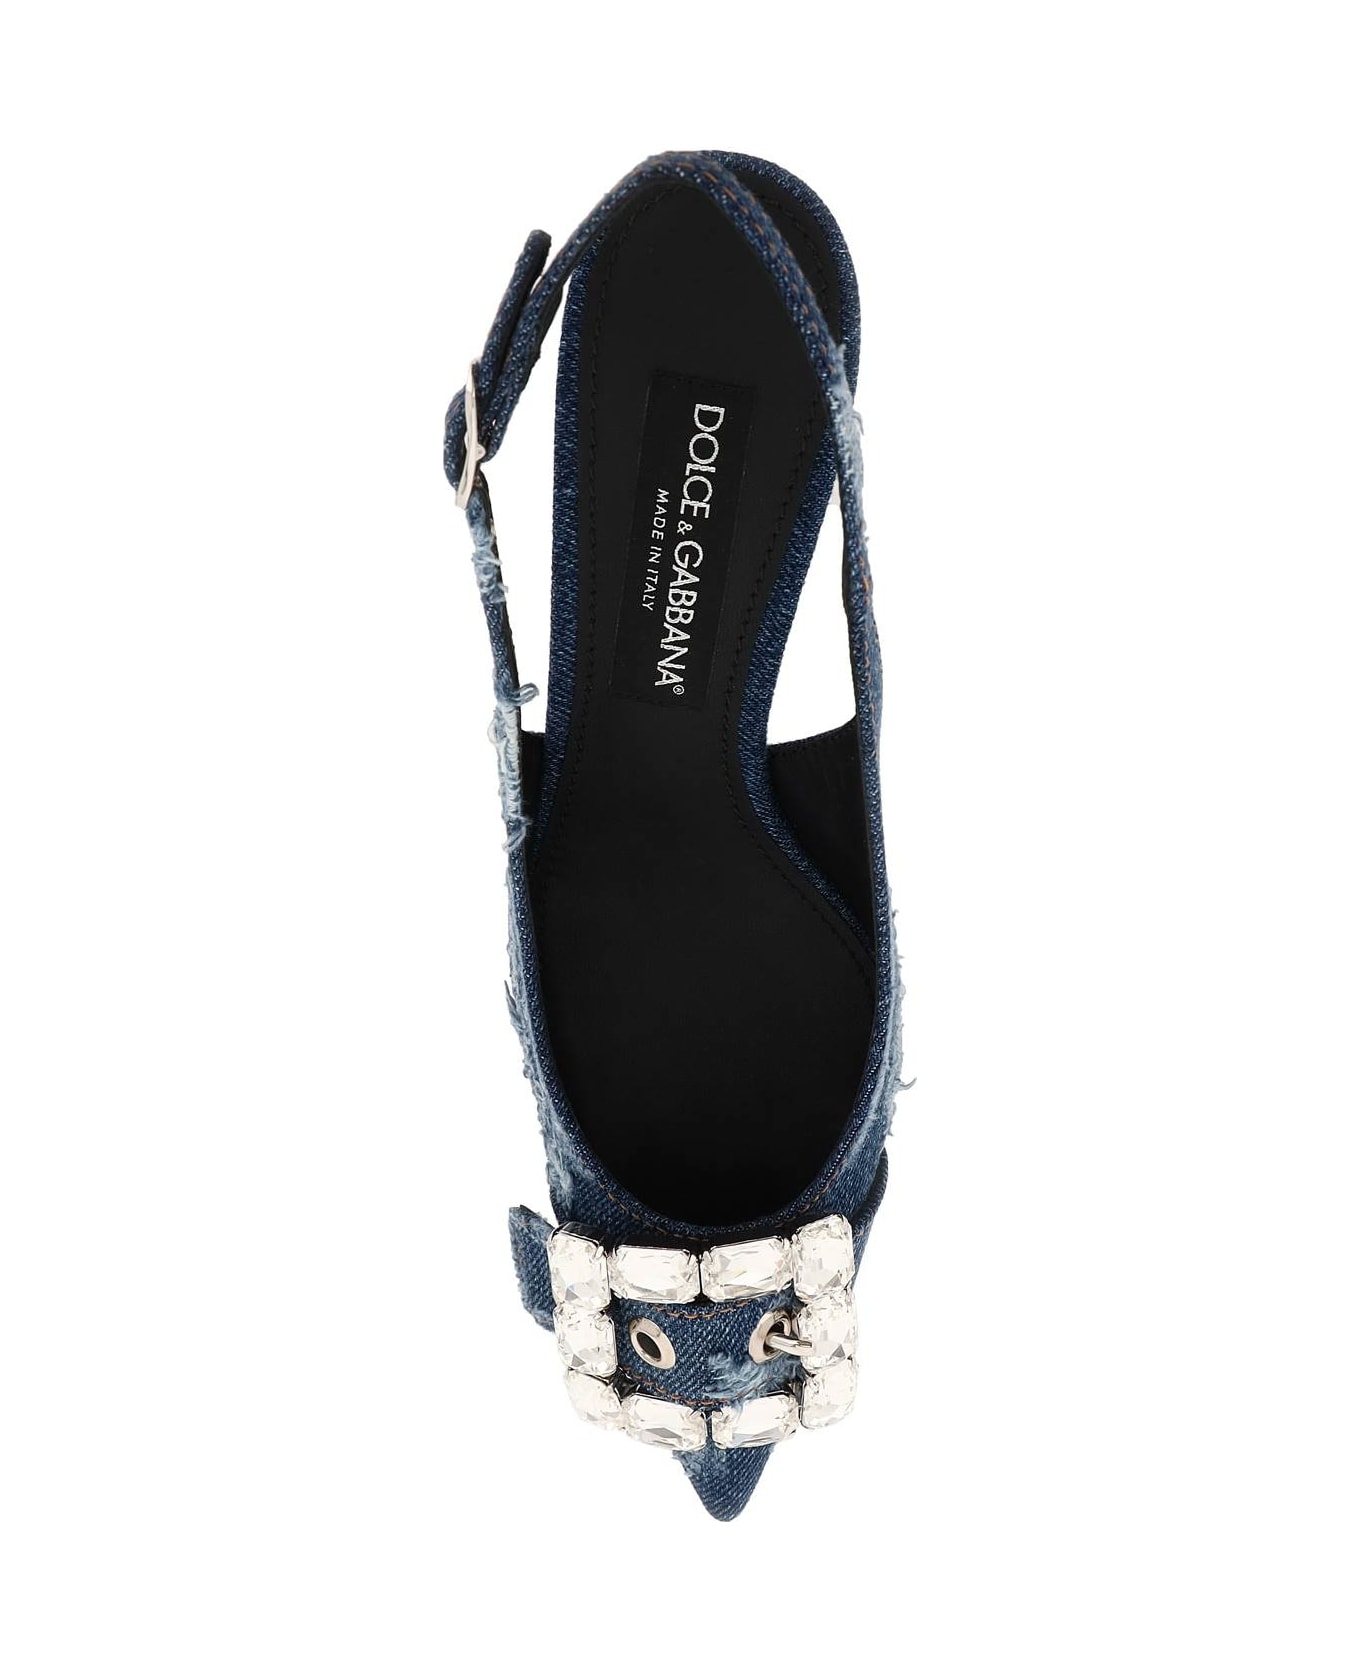 Dolce & Gabbana Slingback Pumps - Cobalto Scuro